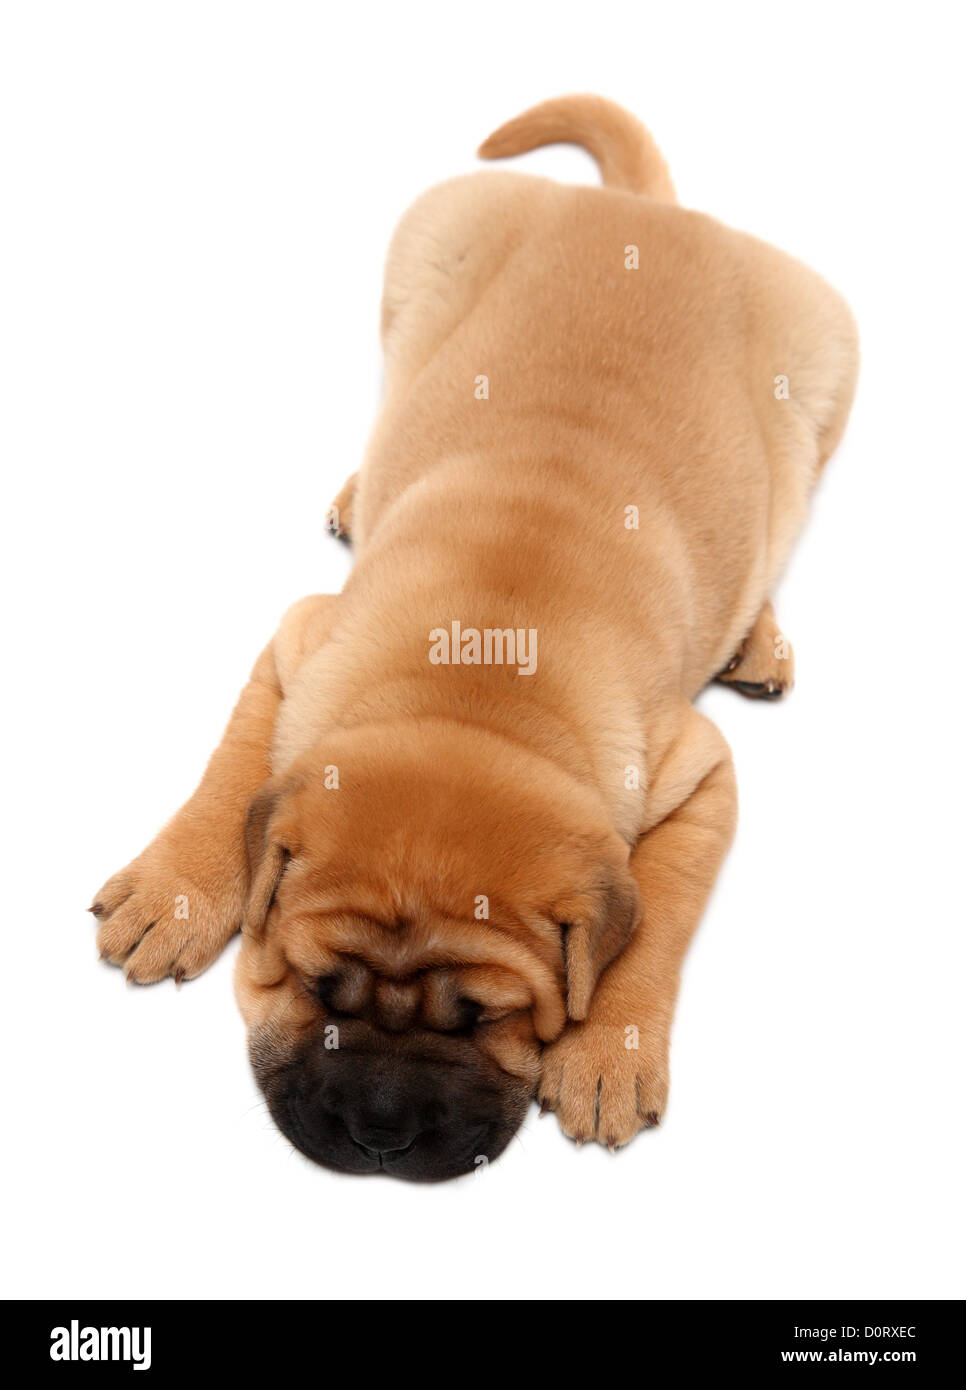 shar pei puppy dog sleeping Stock Photo